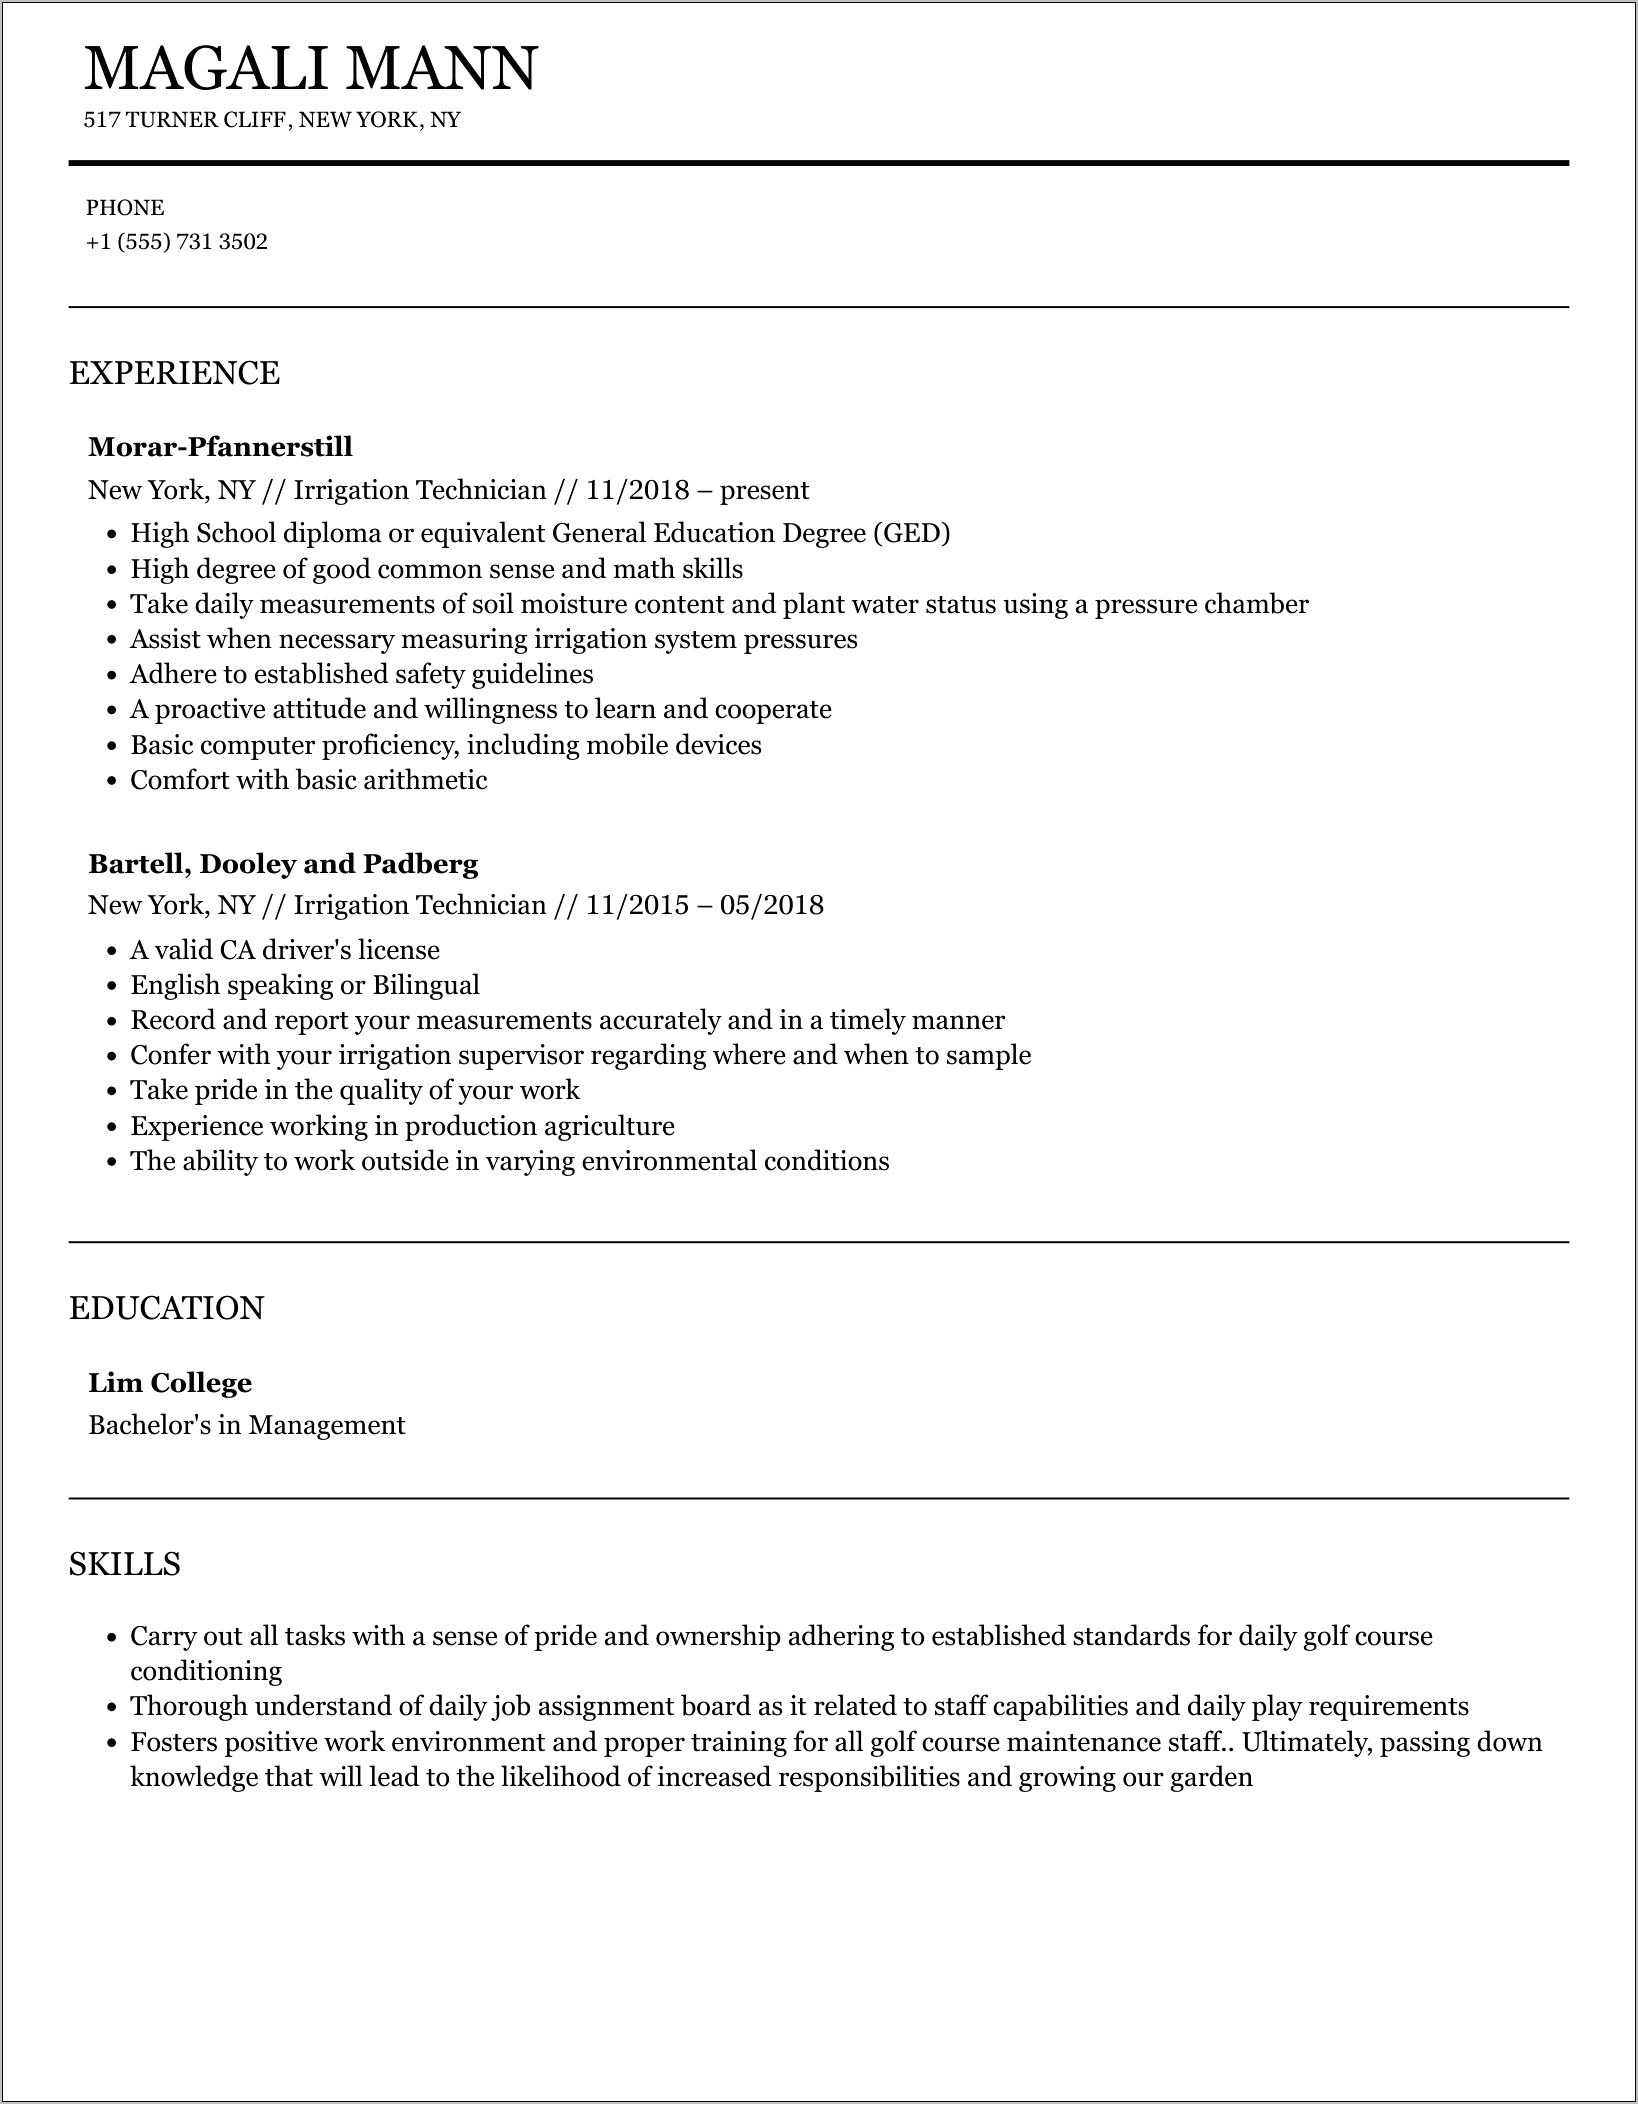 Example Resume Of Irrigation Technician